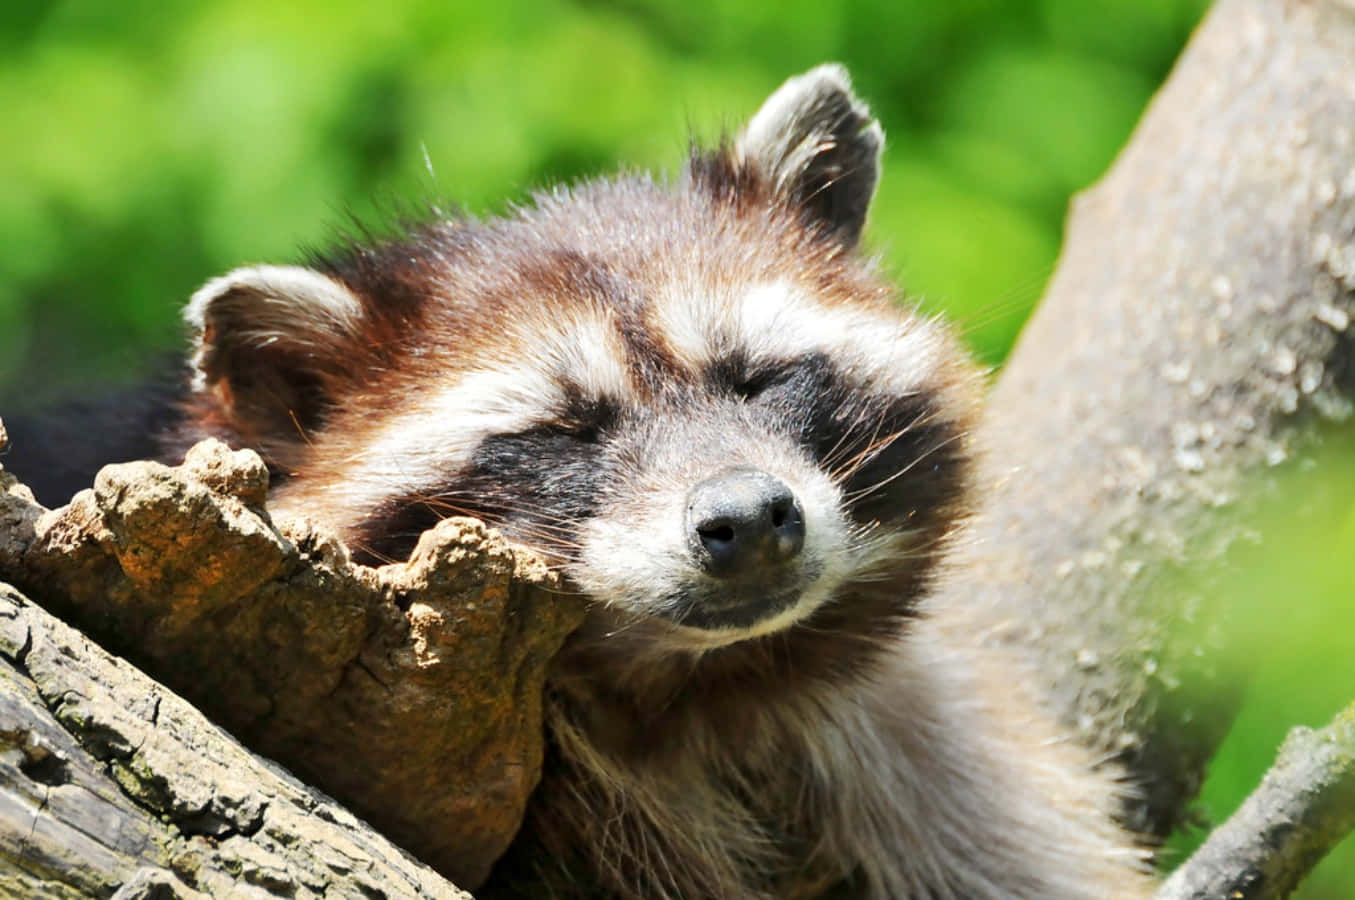 Cute Raccoon Sleeping On Tree Trunk Picture